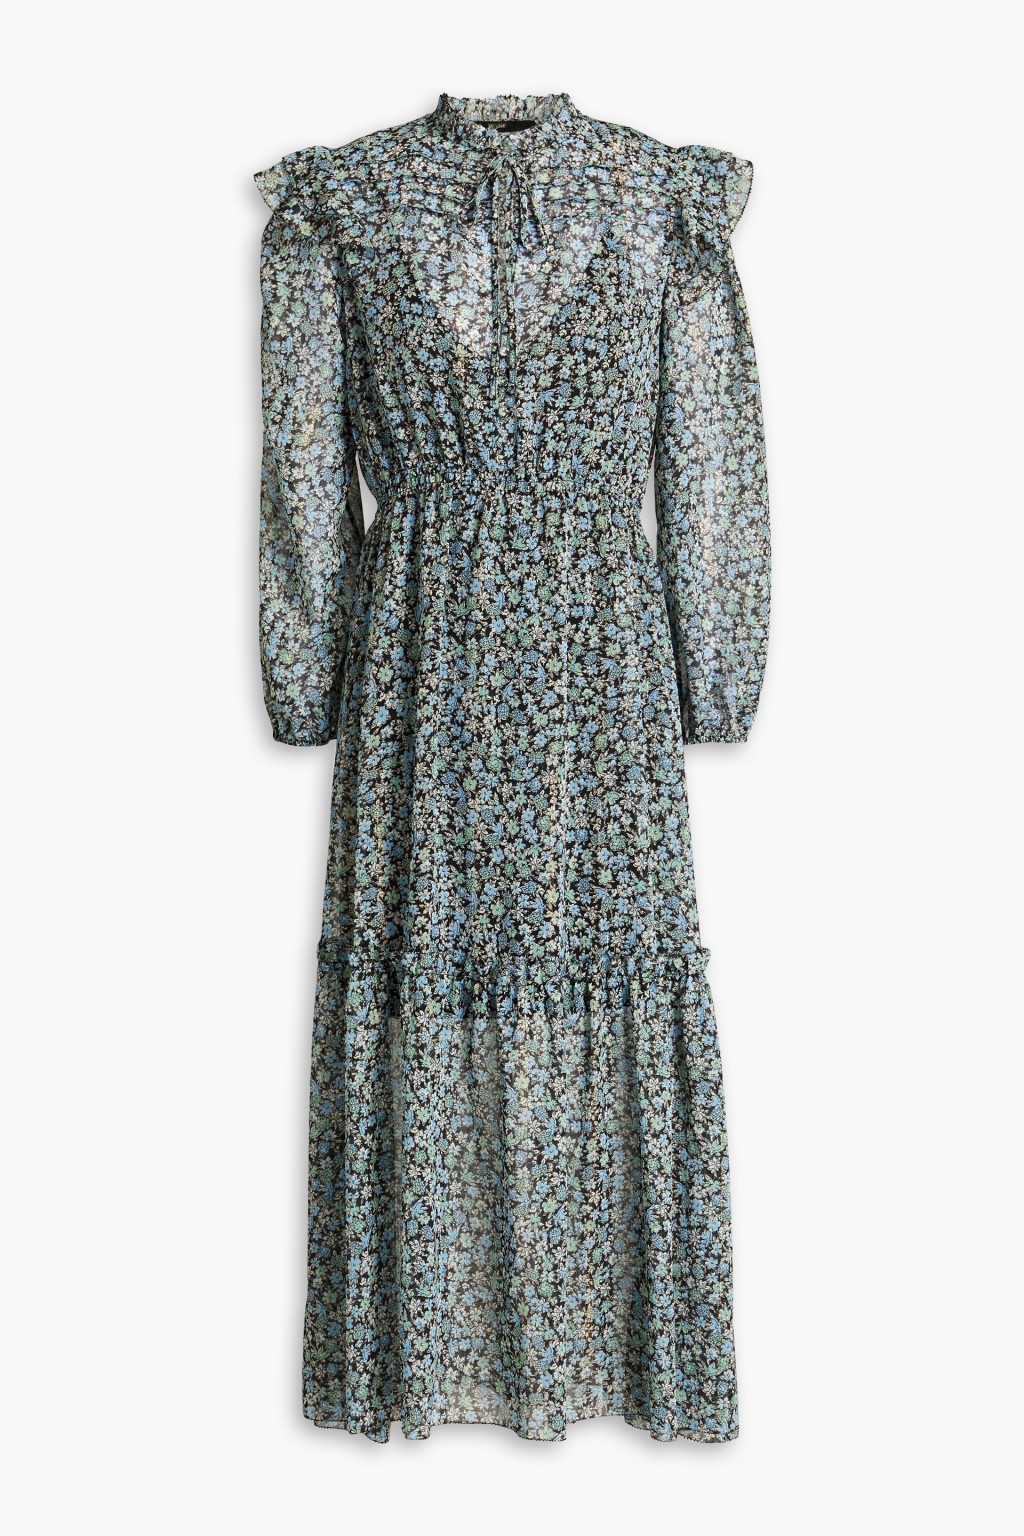 Maje连身裙/原价$2,024、现售$1,518/The Outnet。